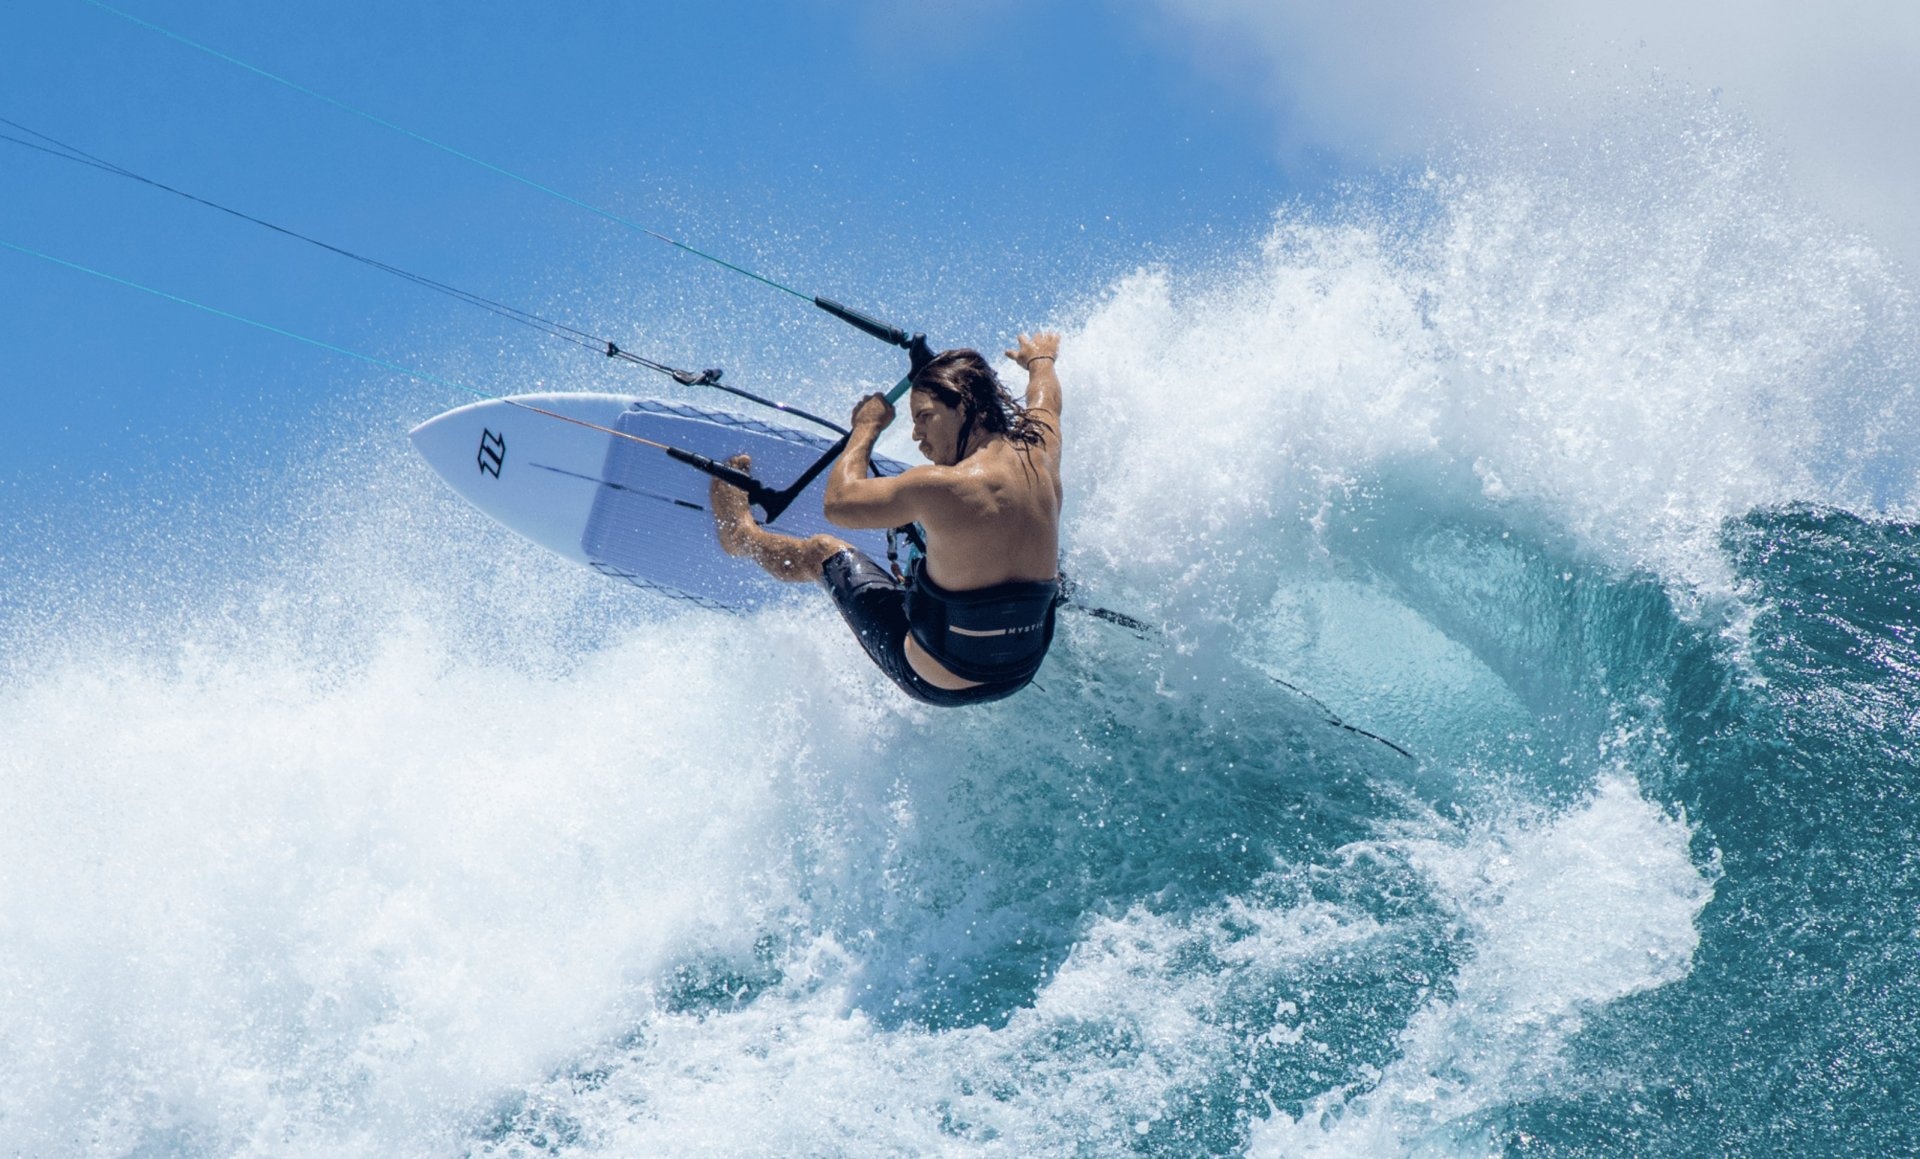 Kiteboarding: Surfboard, IKA, World cup events, Wave-riding, Kitesurfing style. 1920x1160 HD Wallpaper.